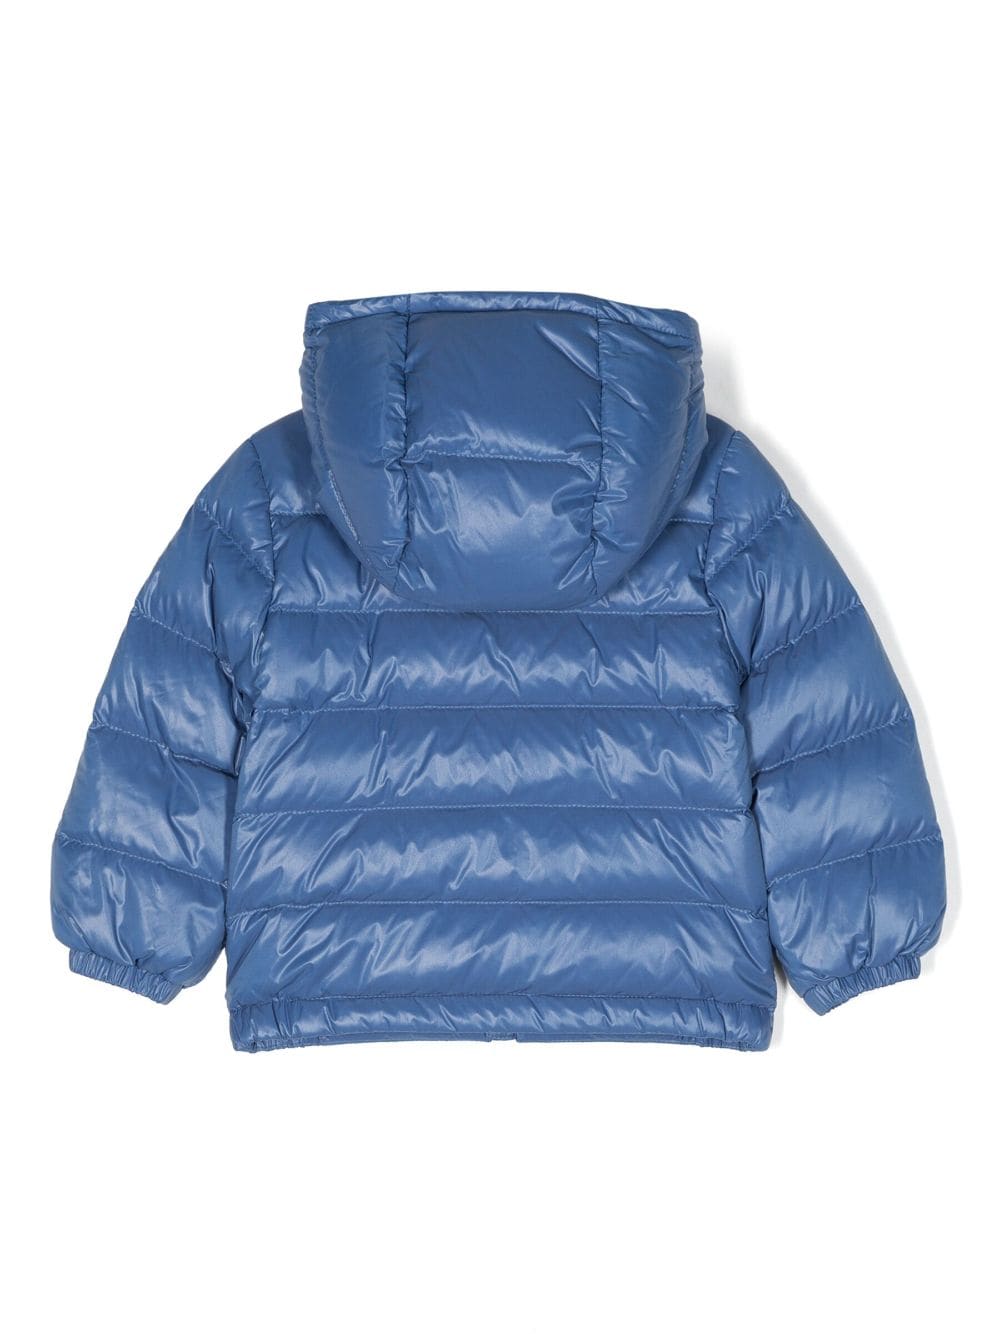 New Aubert blue jacket for newborns